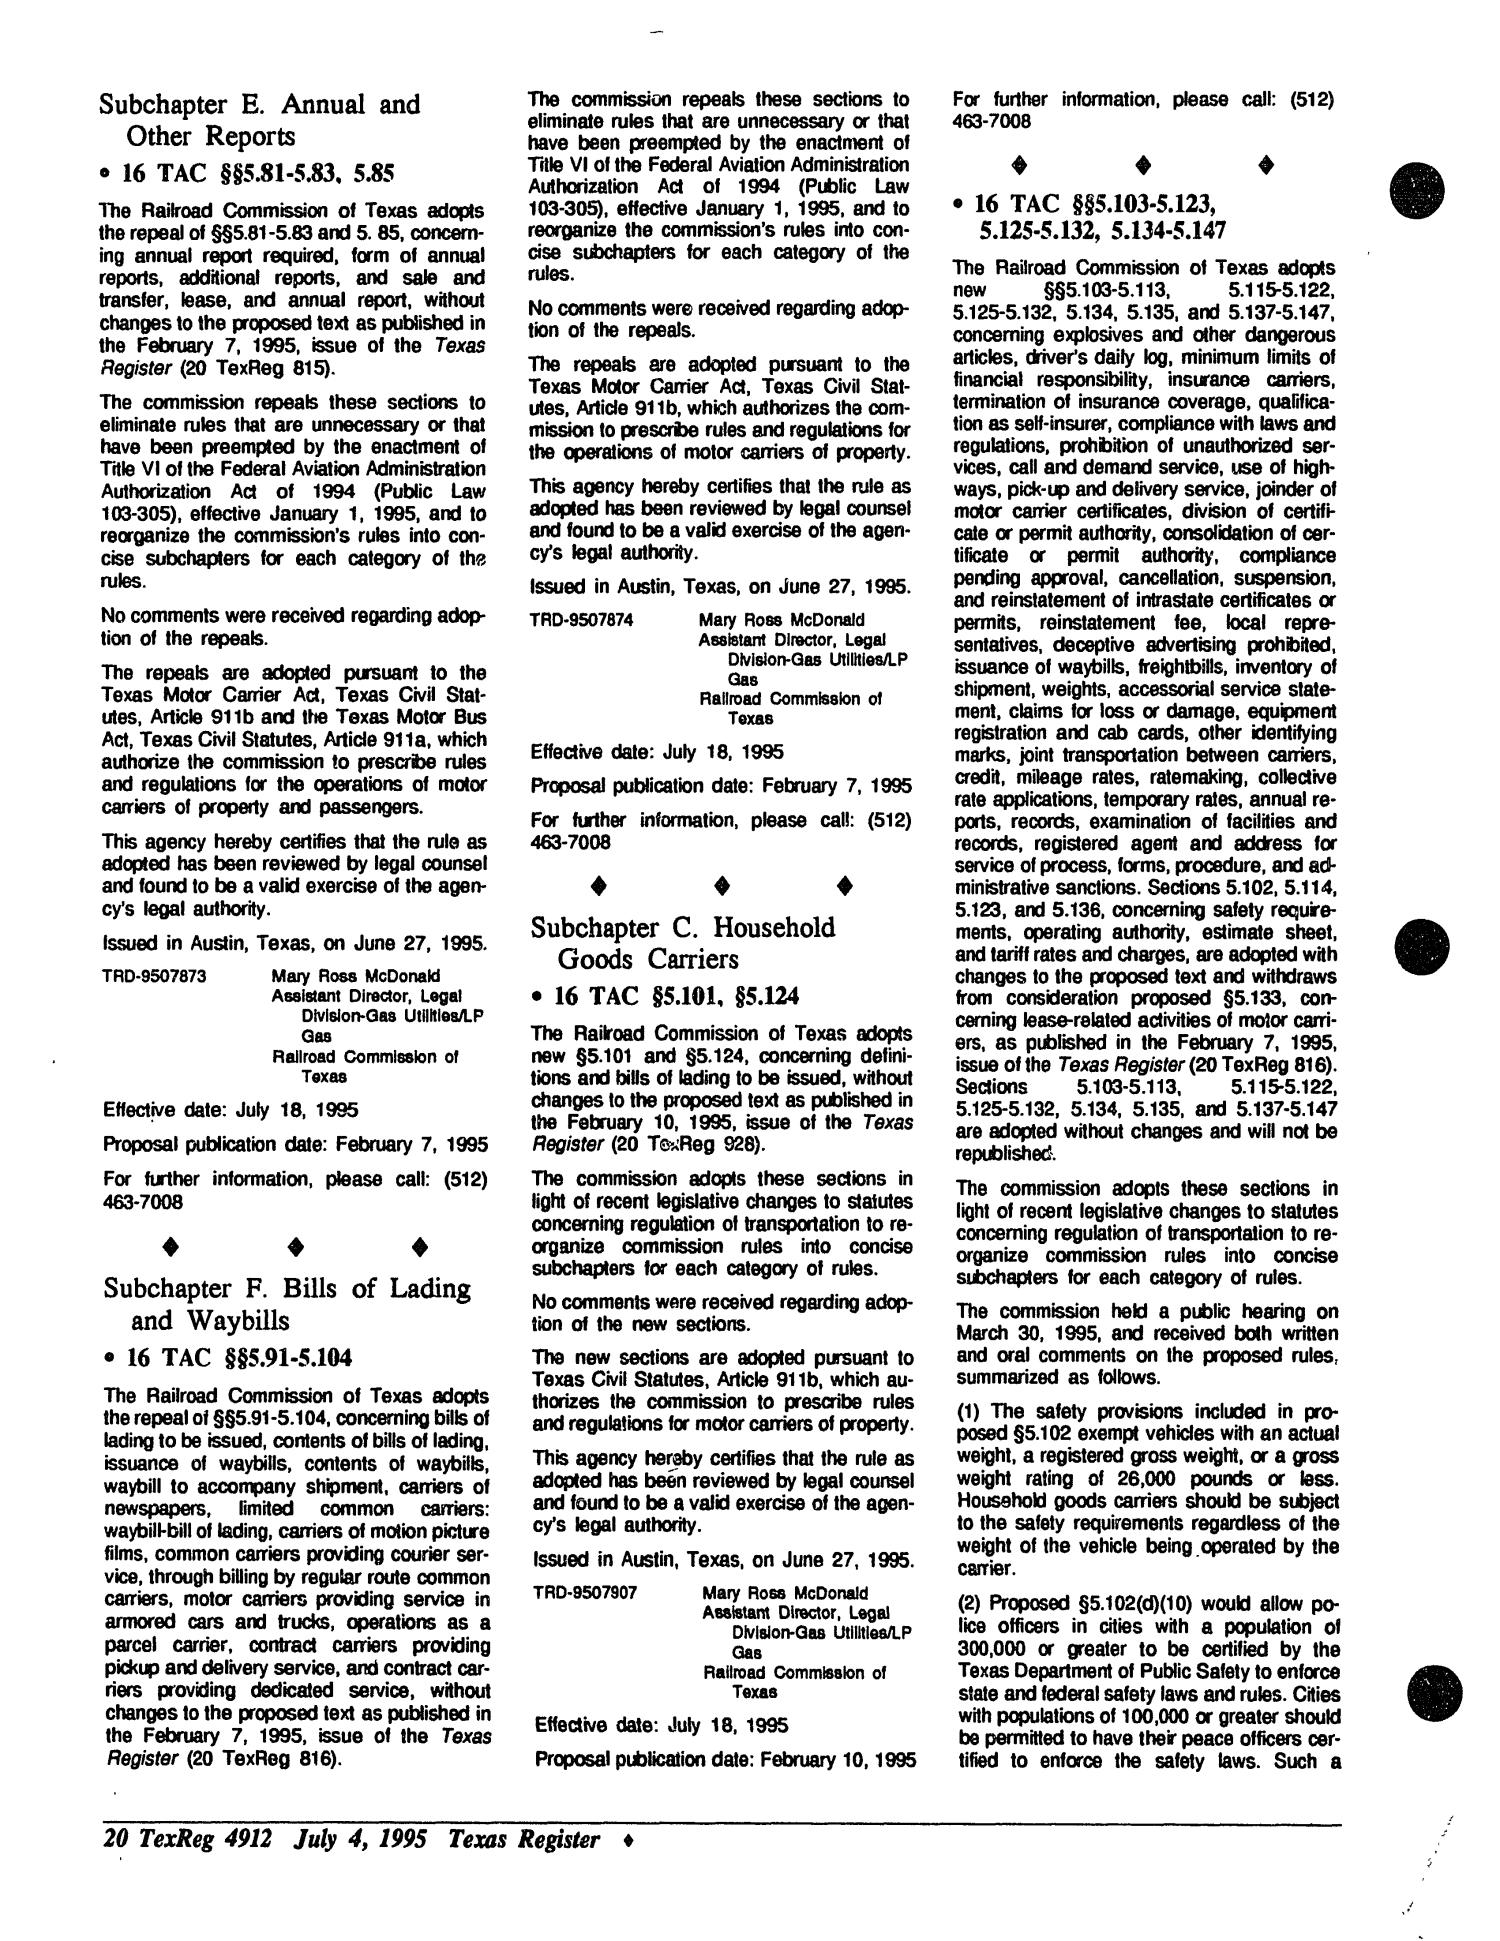 Texas Register, Volume 20, Number 51, Pages 4883-4959, July 4, 1995
                                                
                                                    4912
                                                